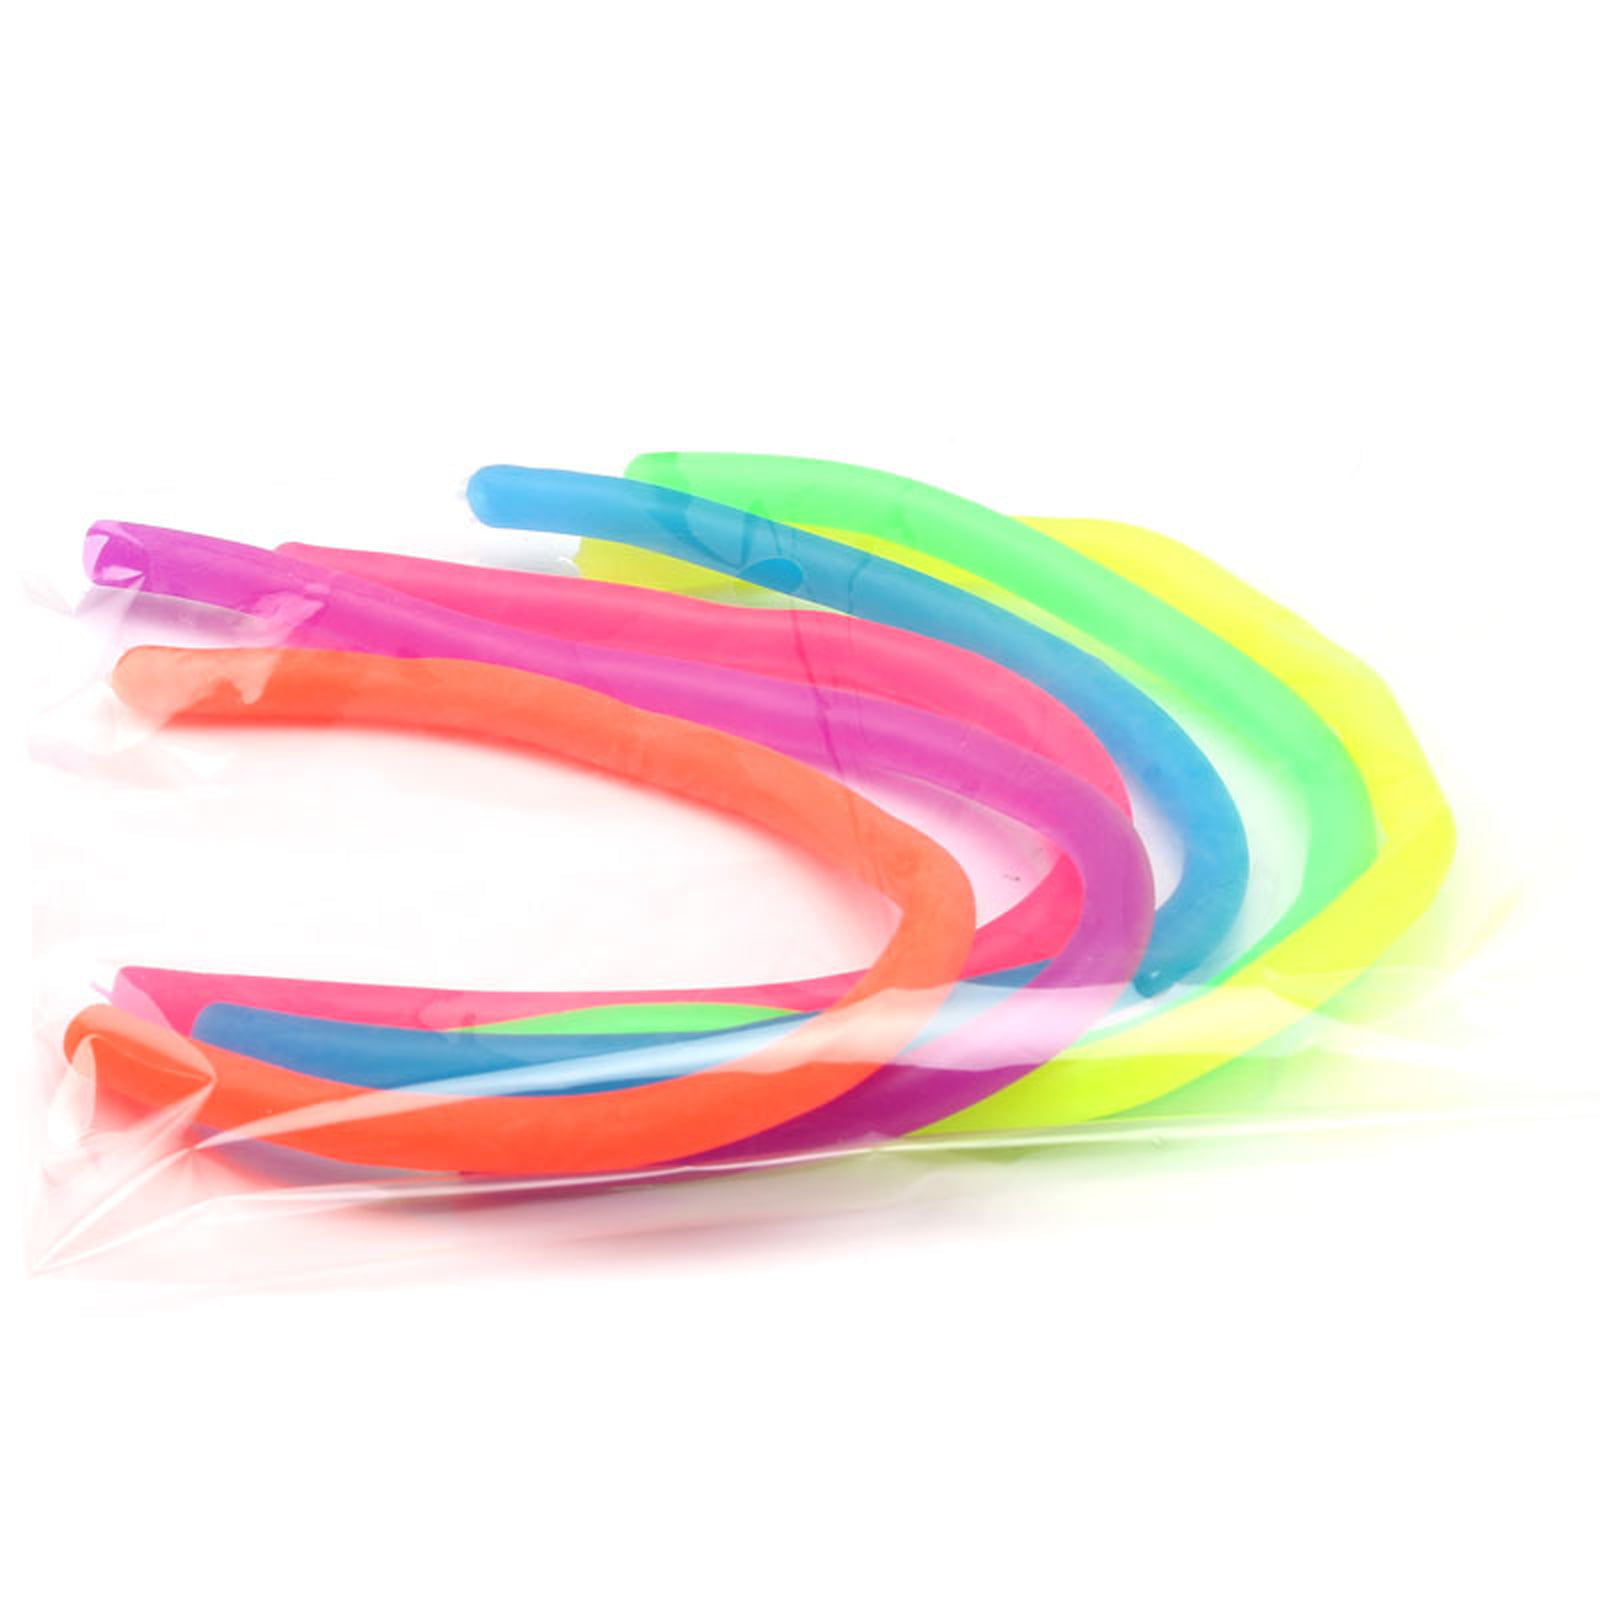 Details about   6Pcs Noodle Rubber String Stretchy Neon Kids Children Fidget Stress Relief Toy 